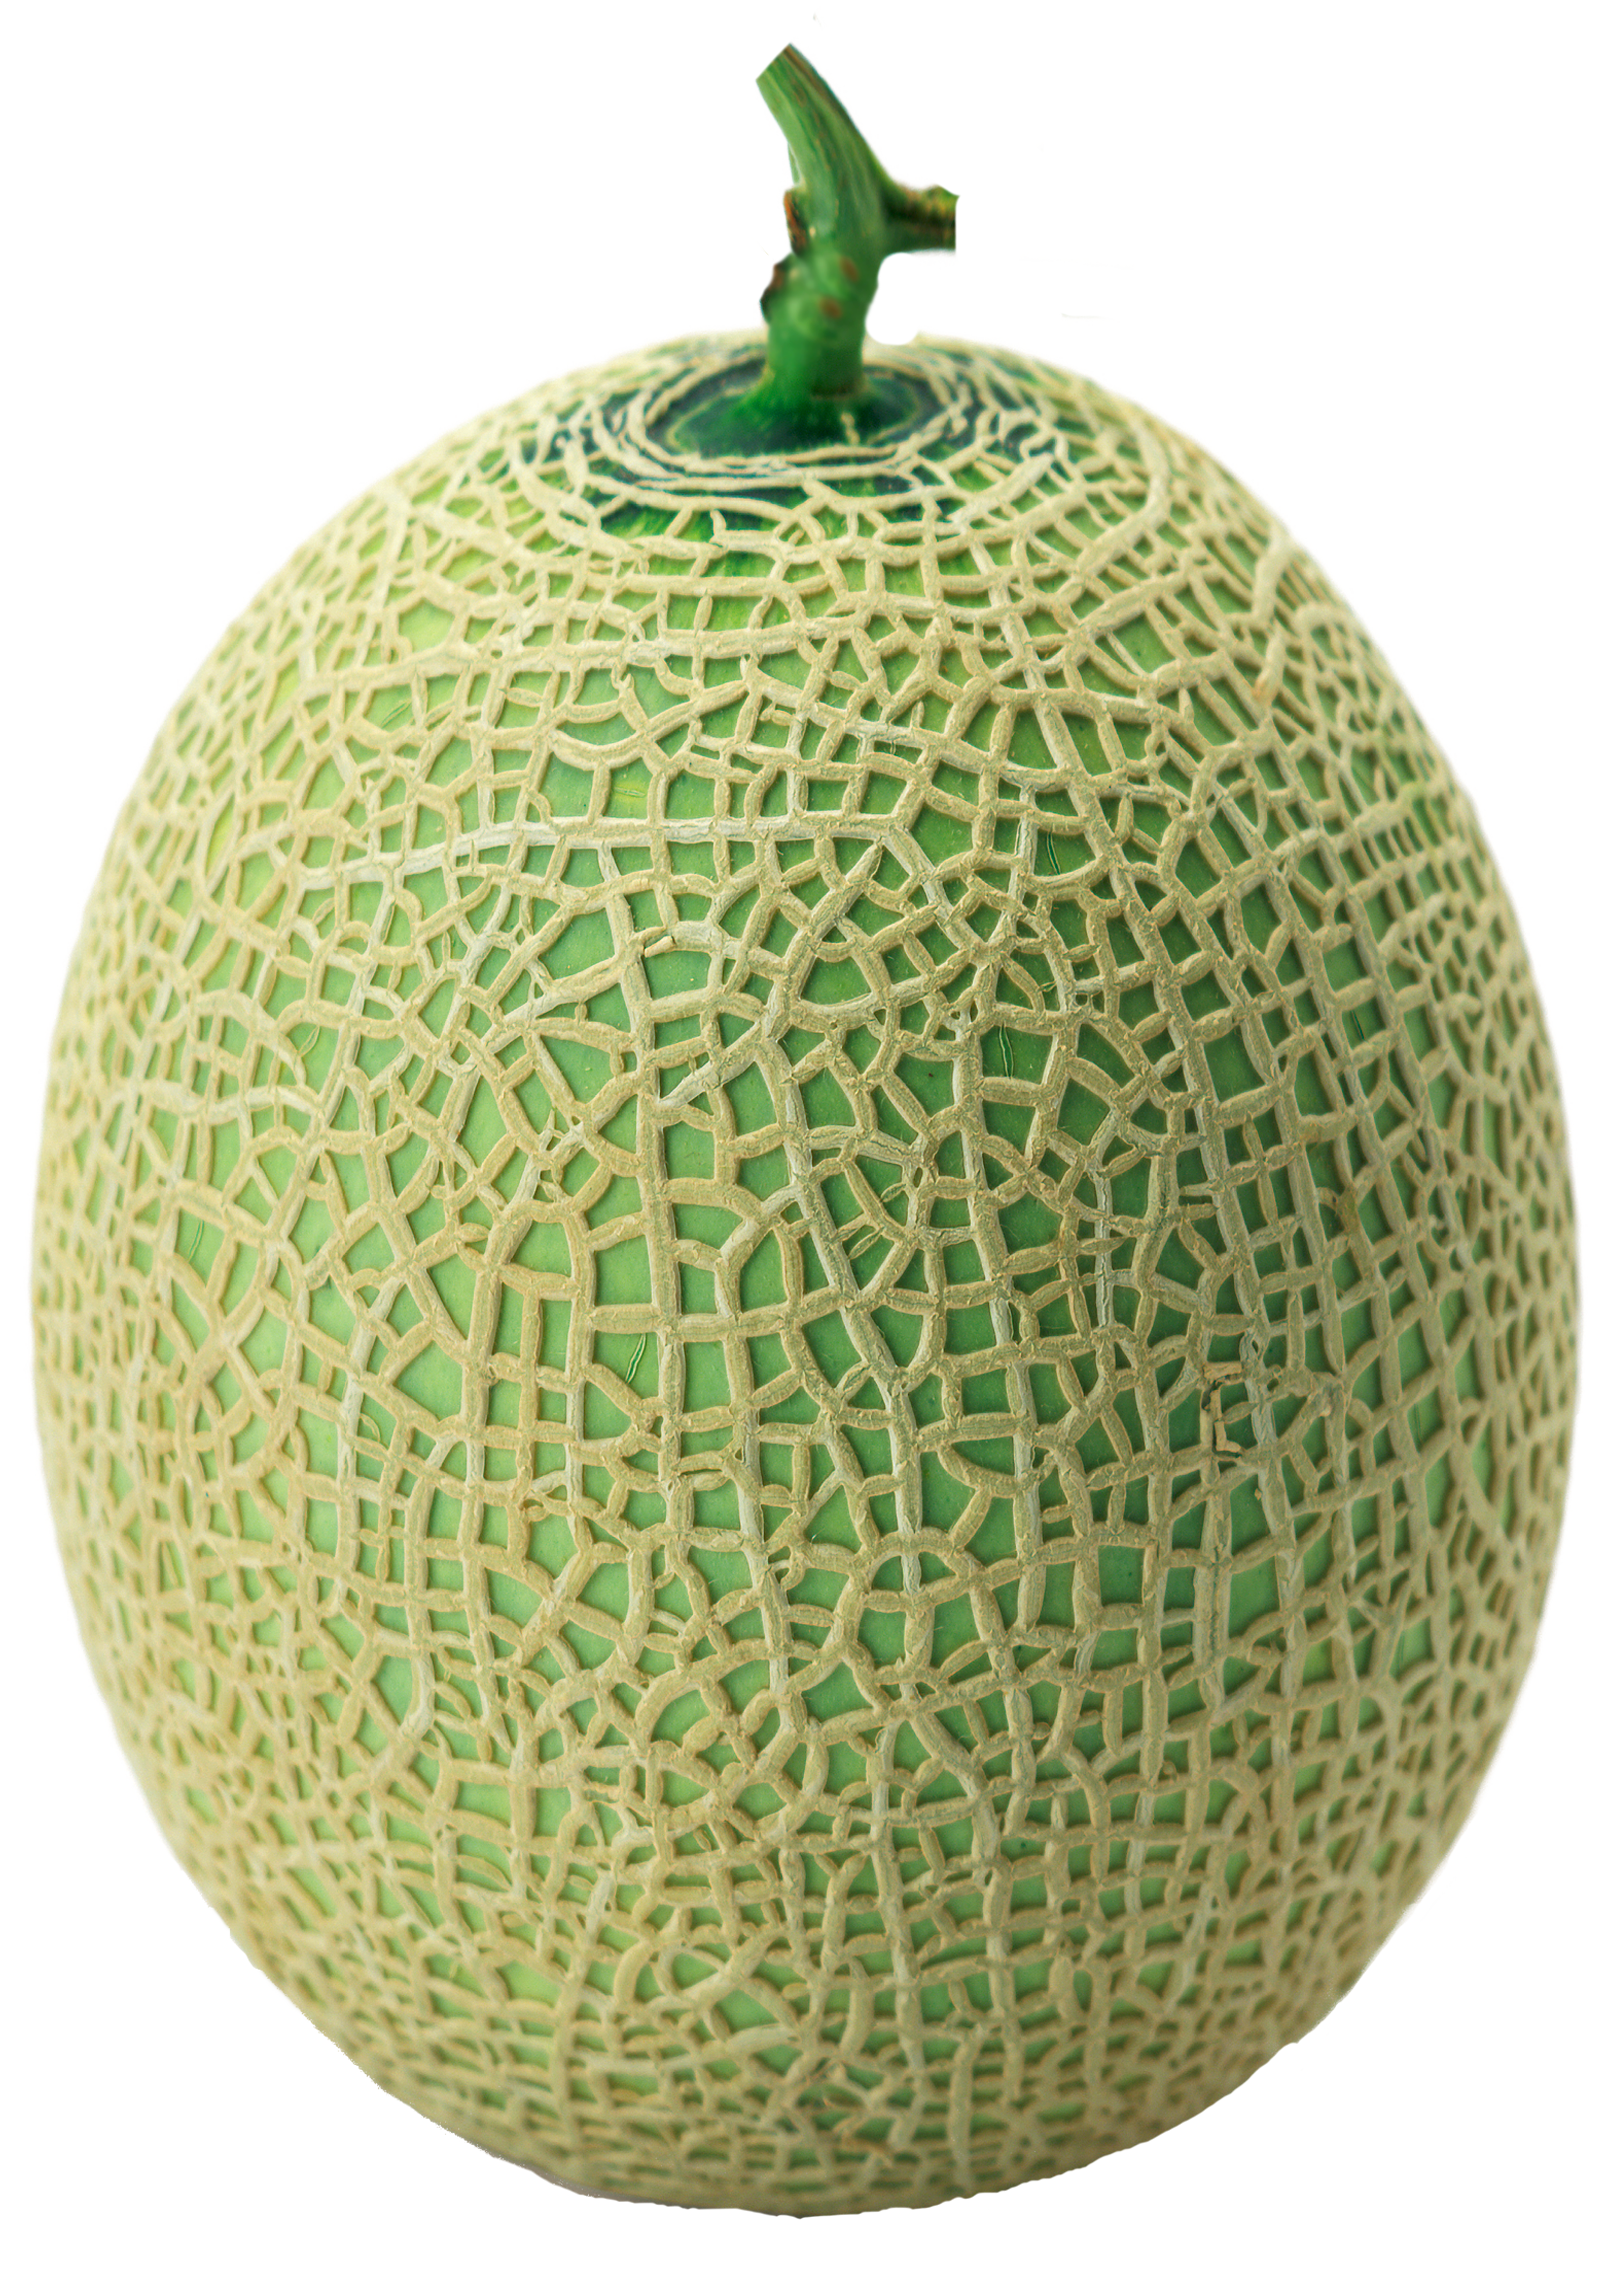 file melon green wikimedia commons #26514